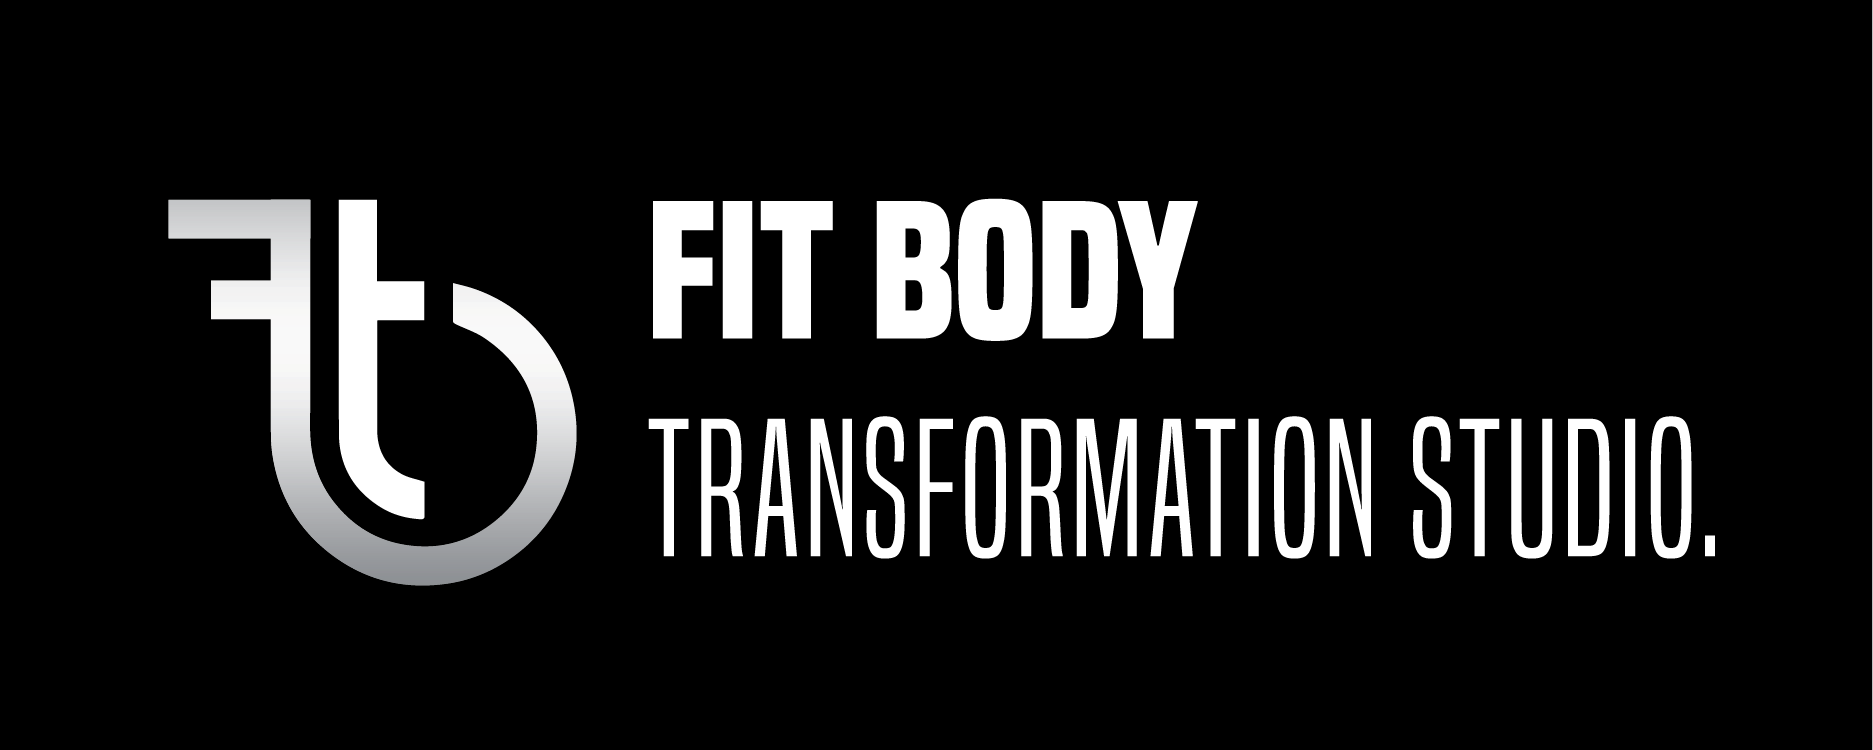 Fit Body Transformation Studio Logo